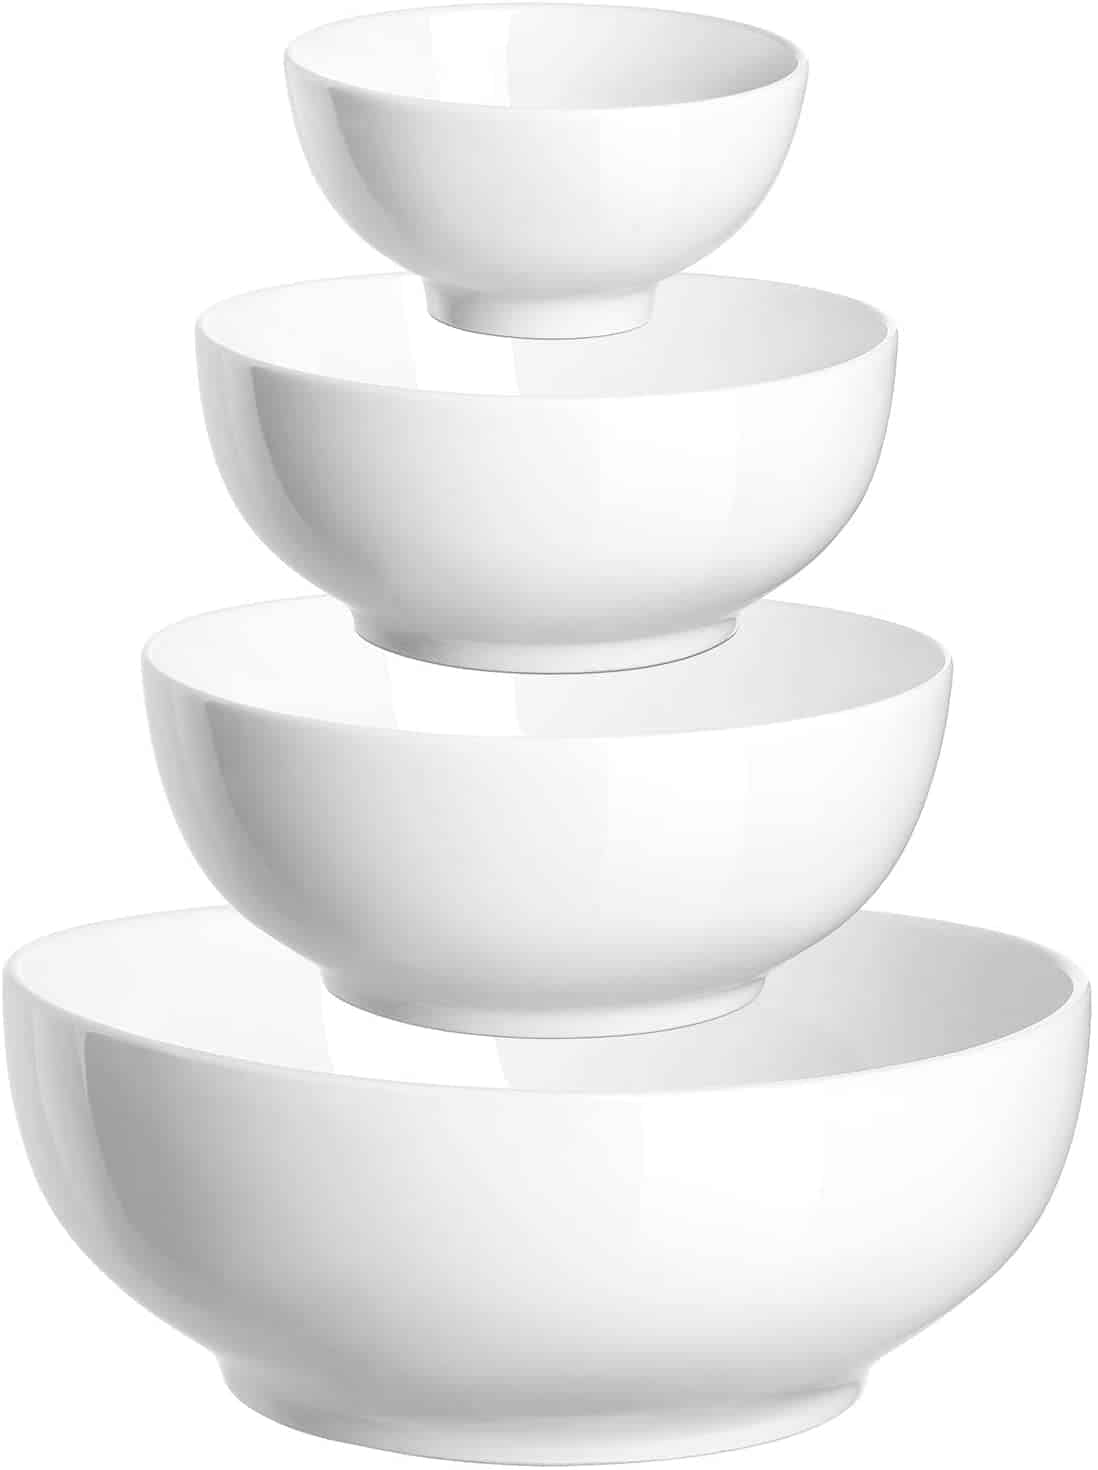 Image of large bowl